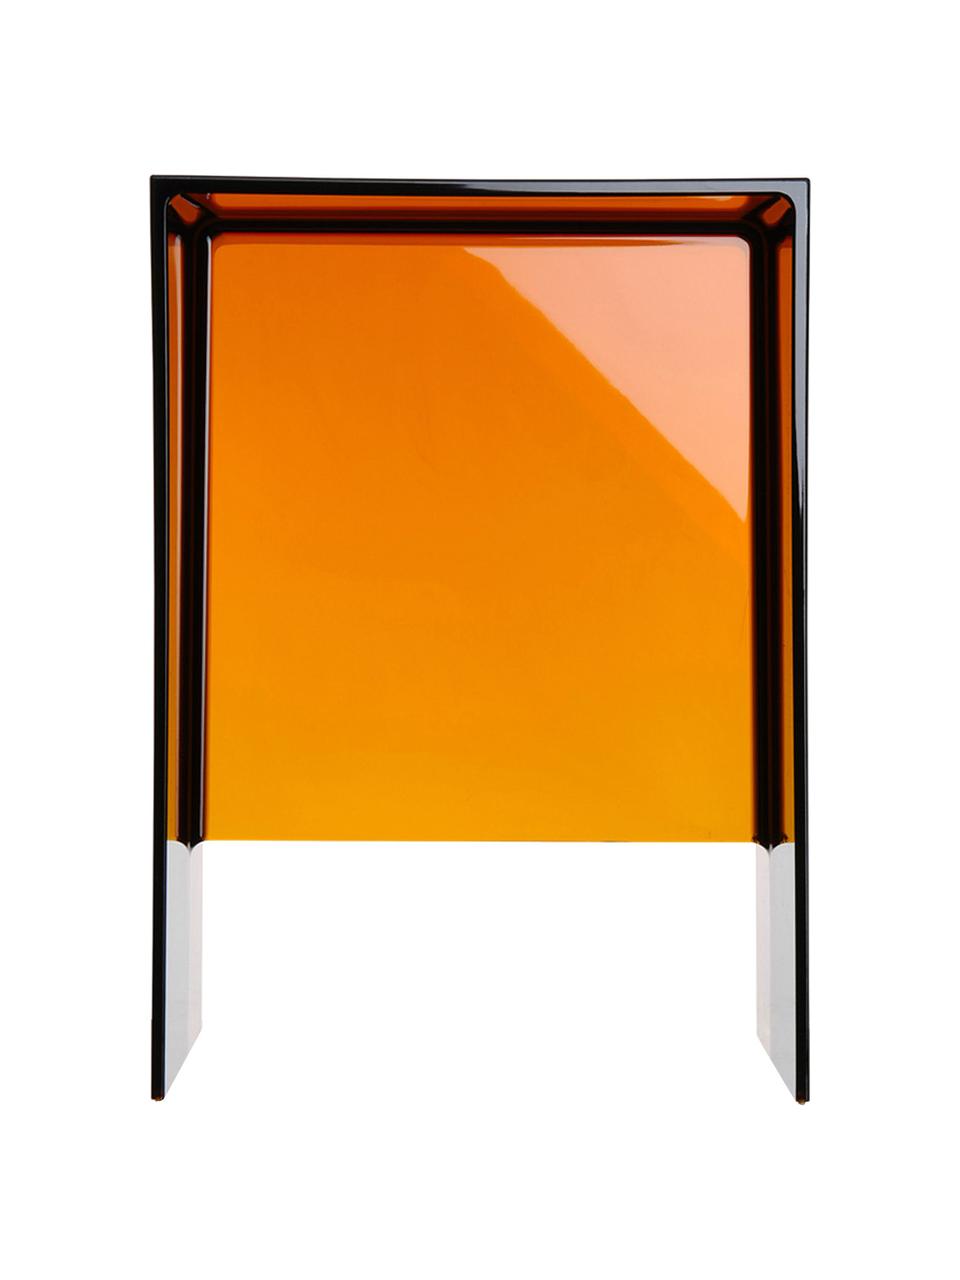 Kruk/bijzettafel Max-Beam in oranje, Gekleurd, transparant polypropyleen, Greenguard-gecertificeerd, Oranje, B 33 x H 47 cm